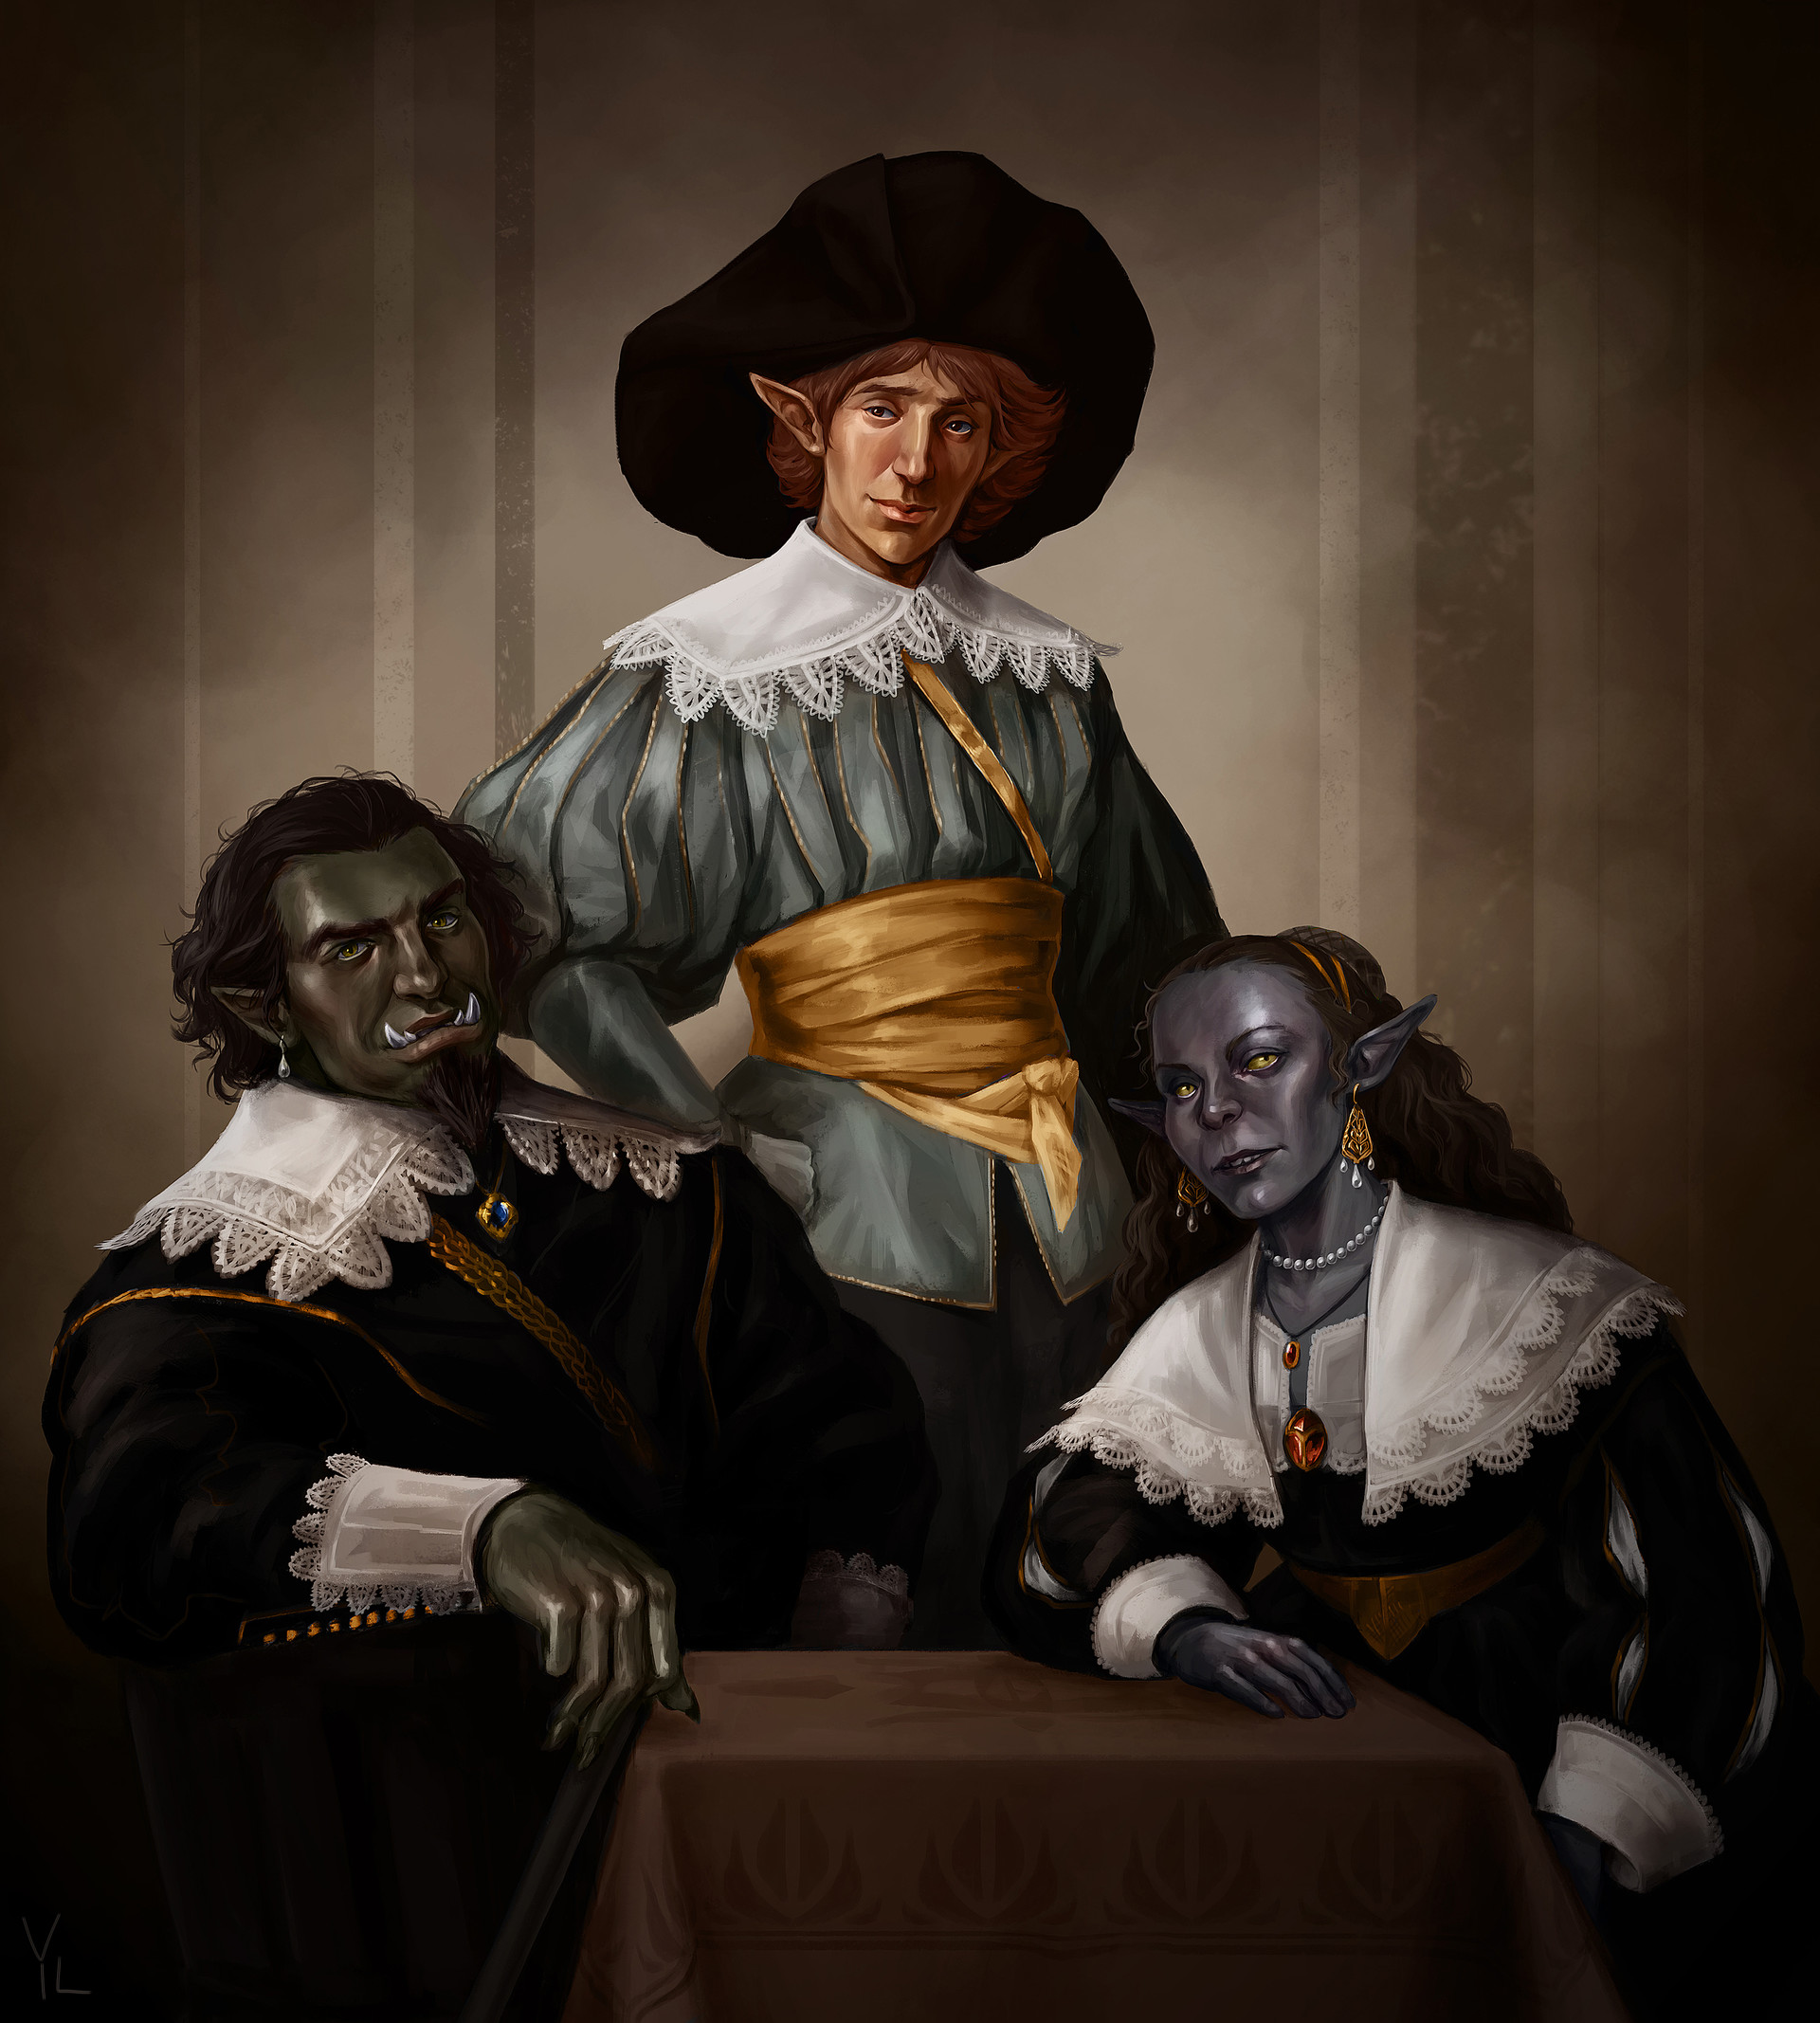 Members of the Merchant's Guild